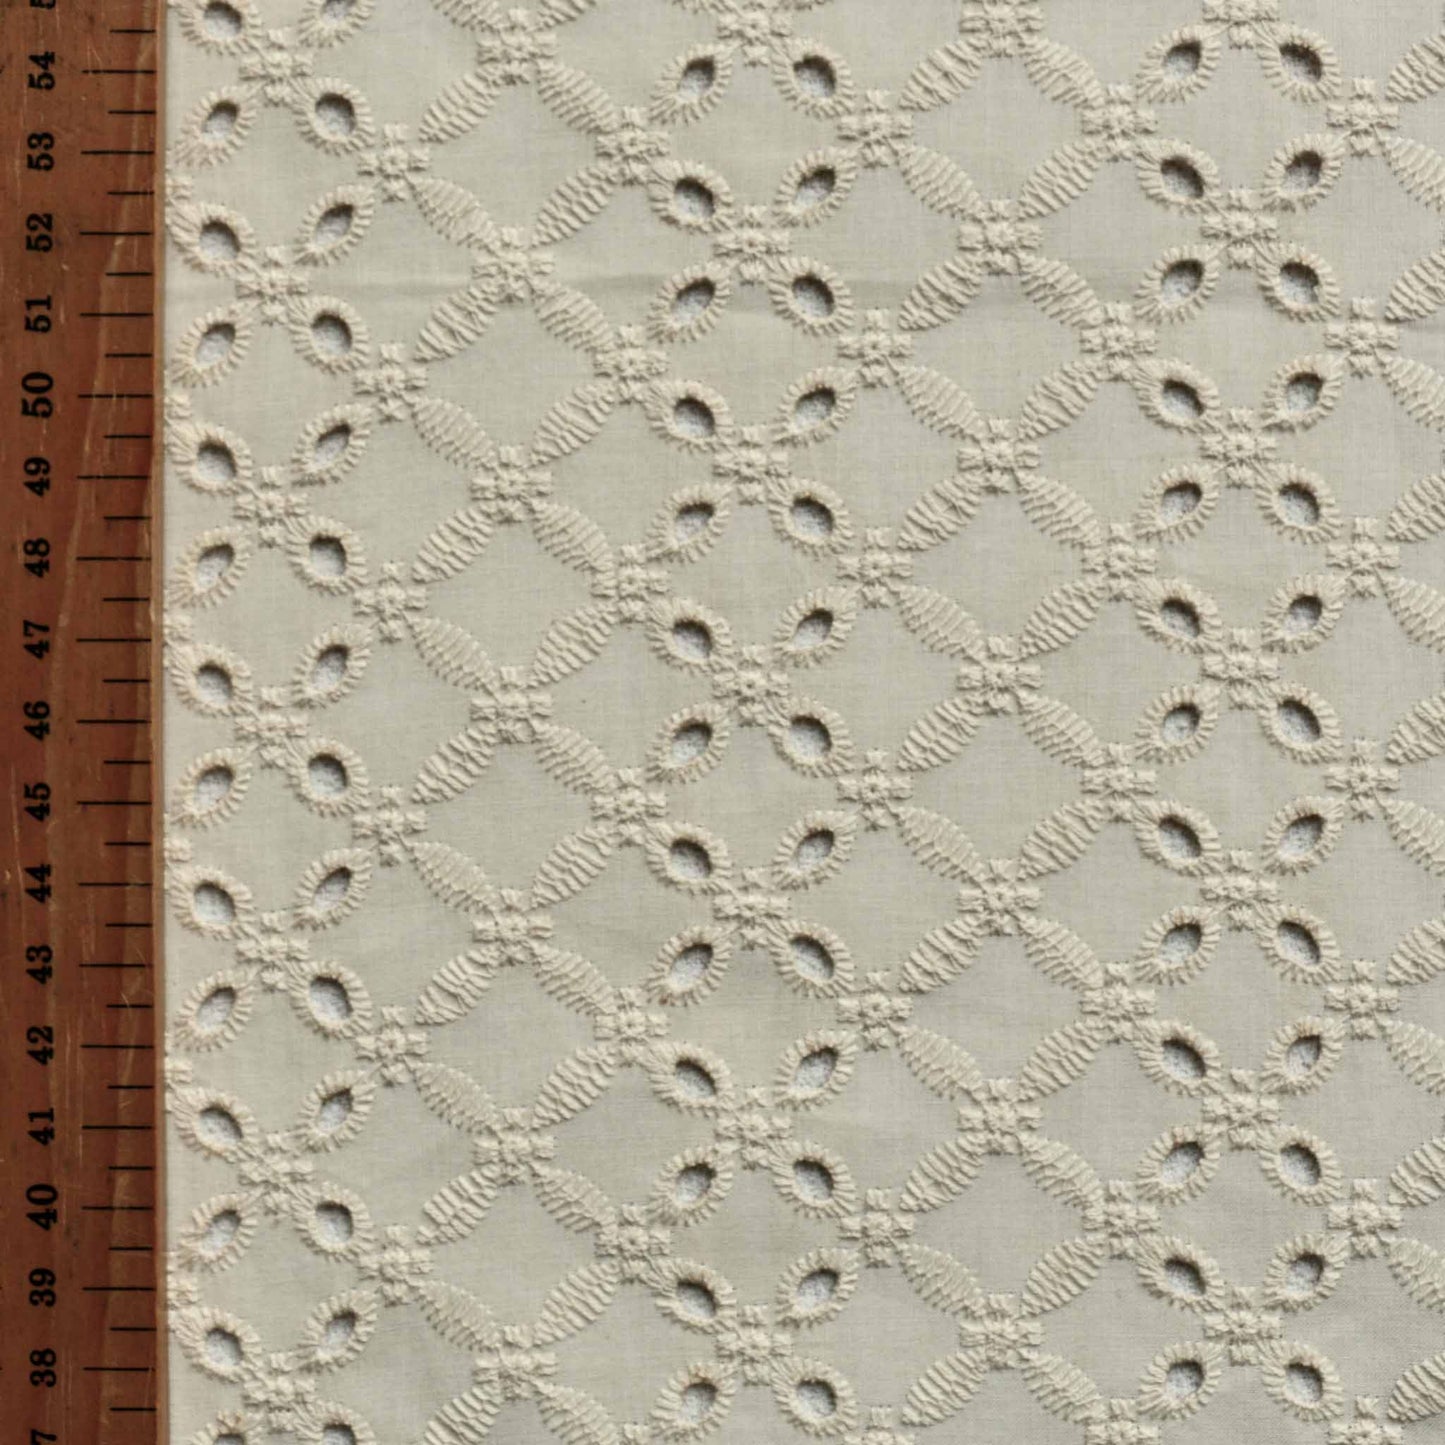 metre ivory broad anglaise 4 hole dressmaking fabric